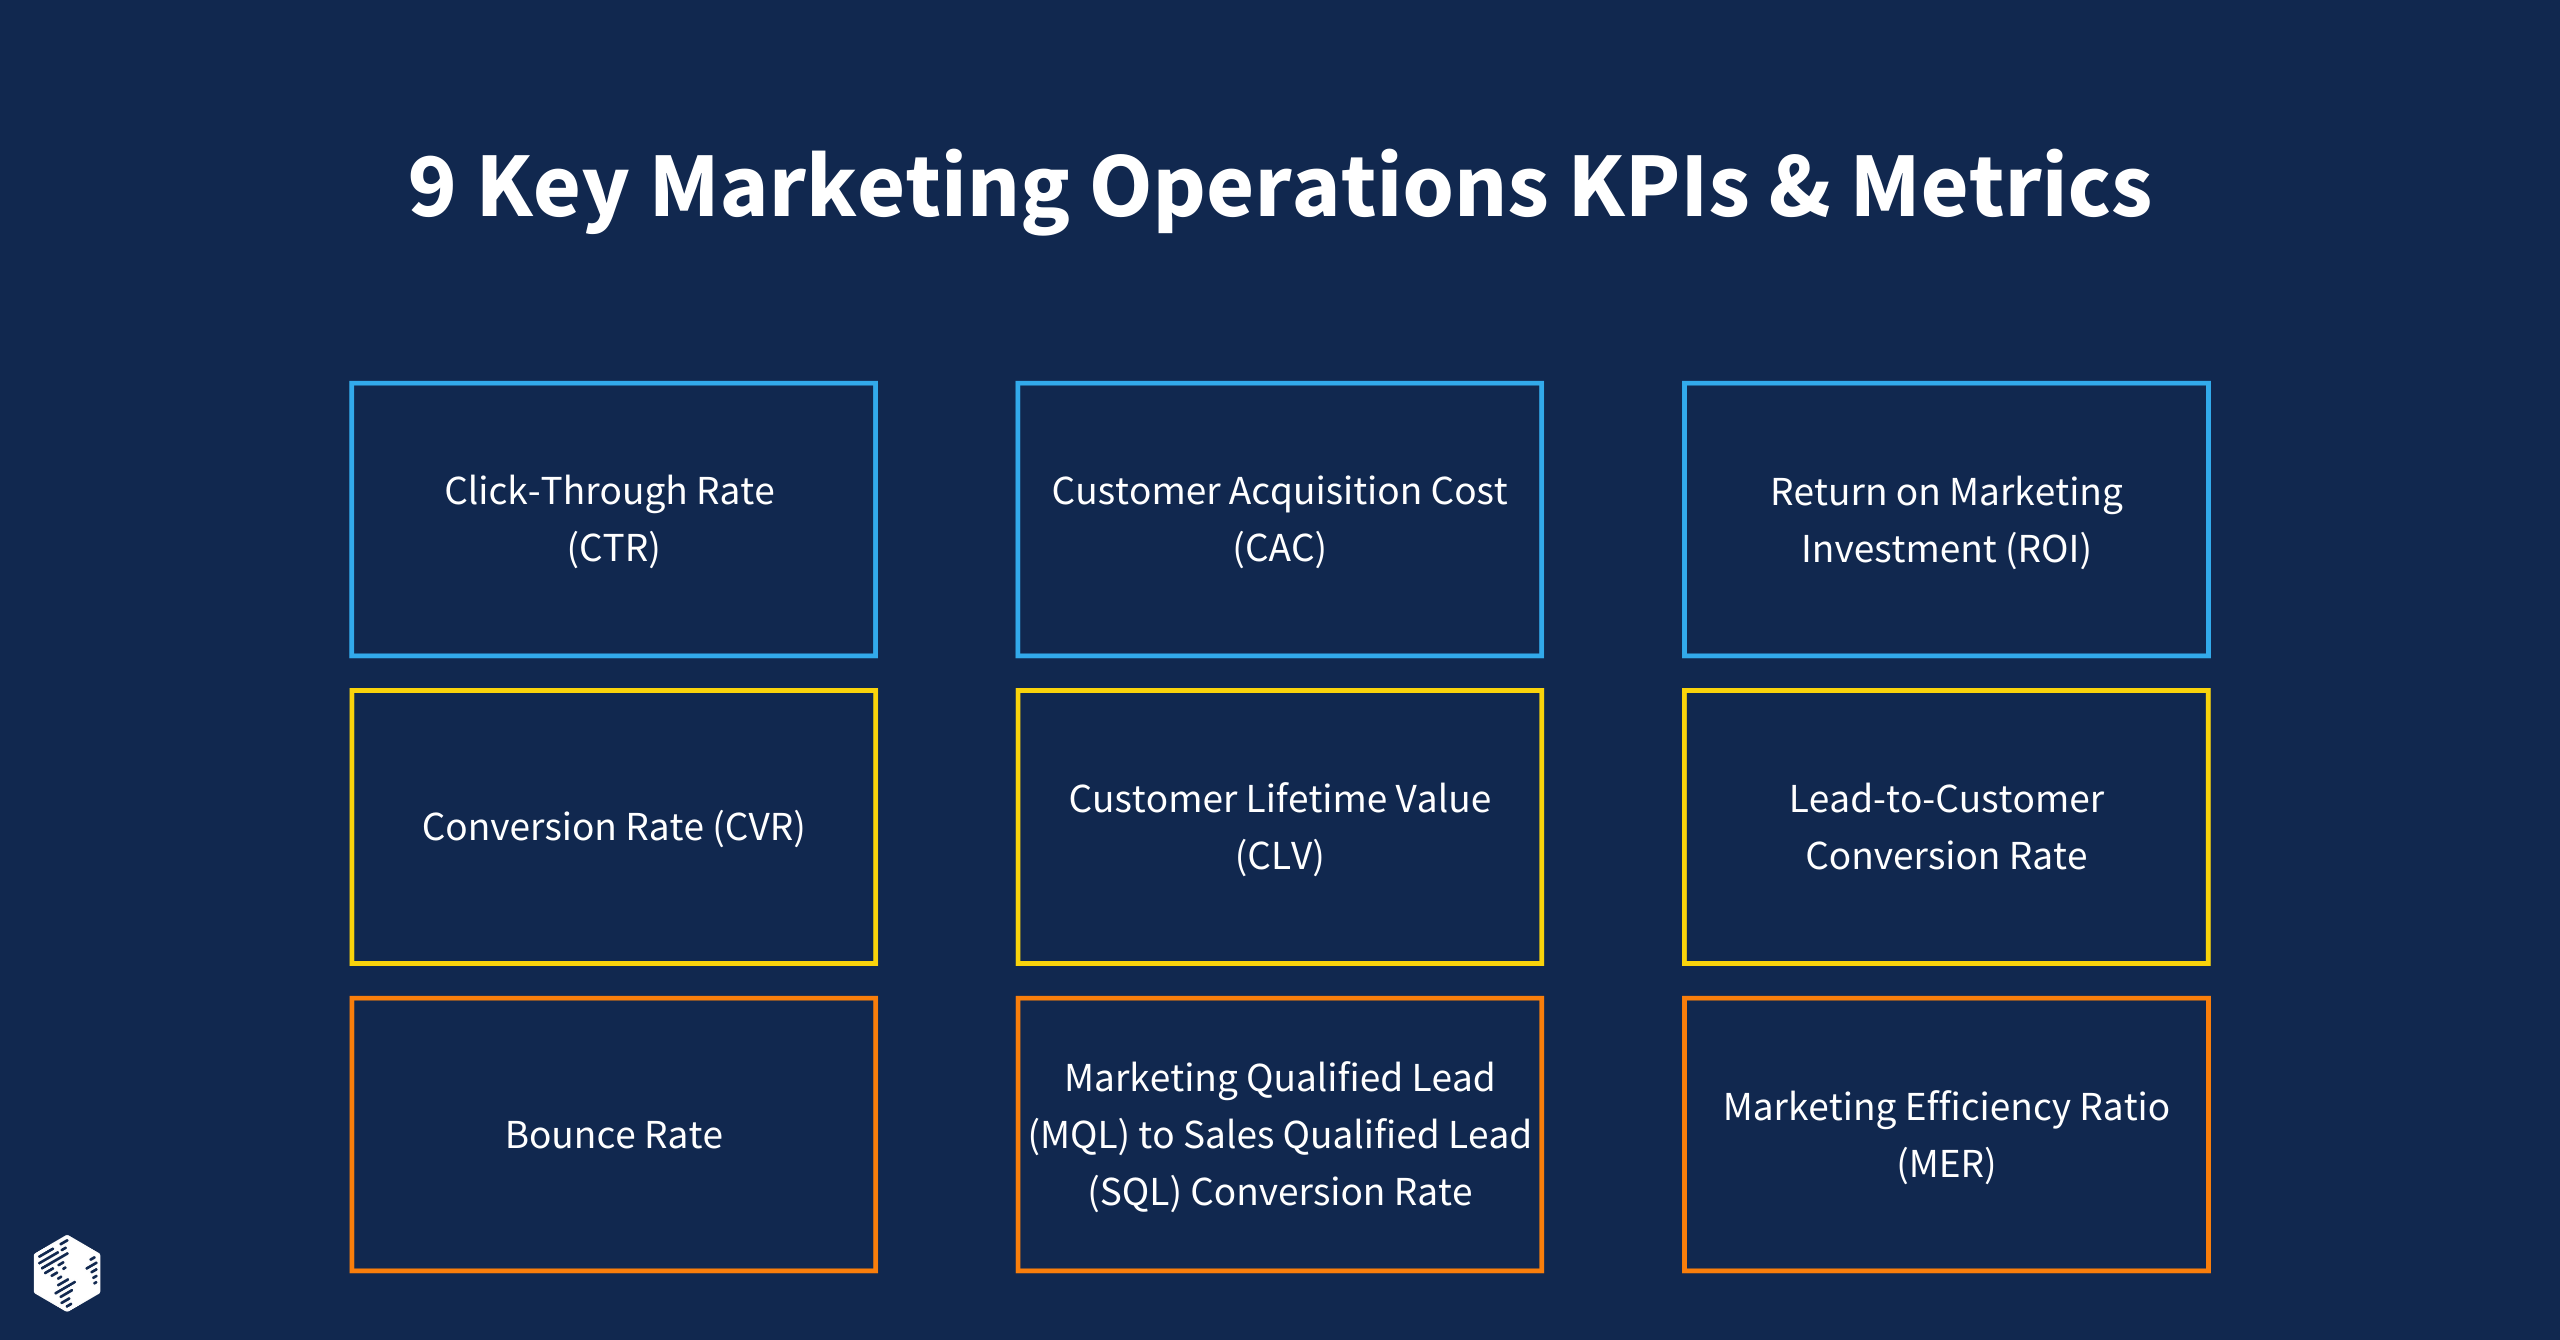 Marketing Operations KPIs & Metrics